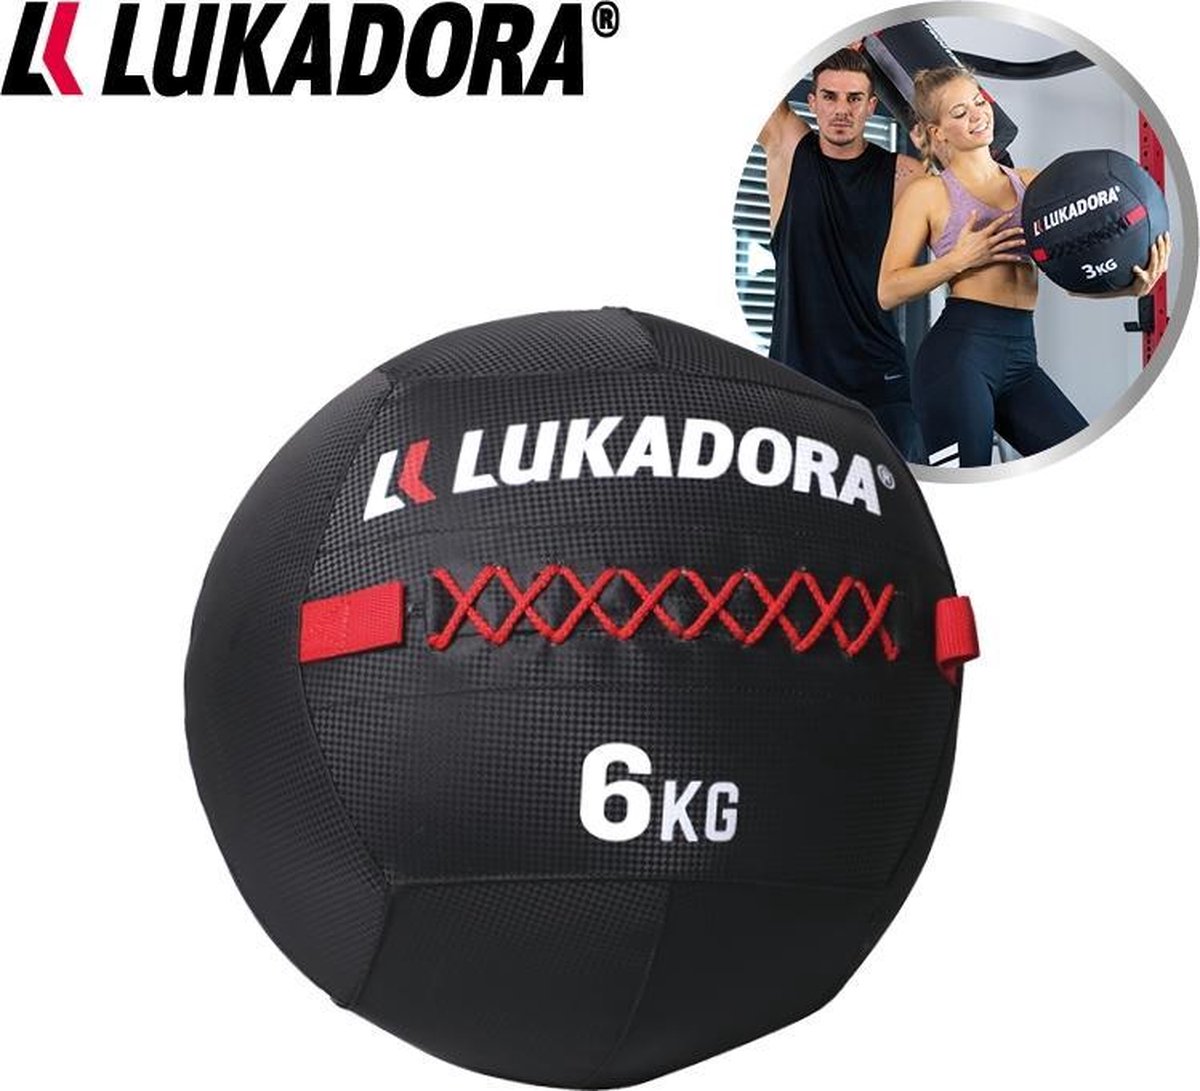 Lukadora Weight Wall Ball 6 kg - Train thuis met uitdagende HIT-circuits